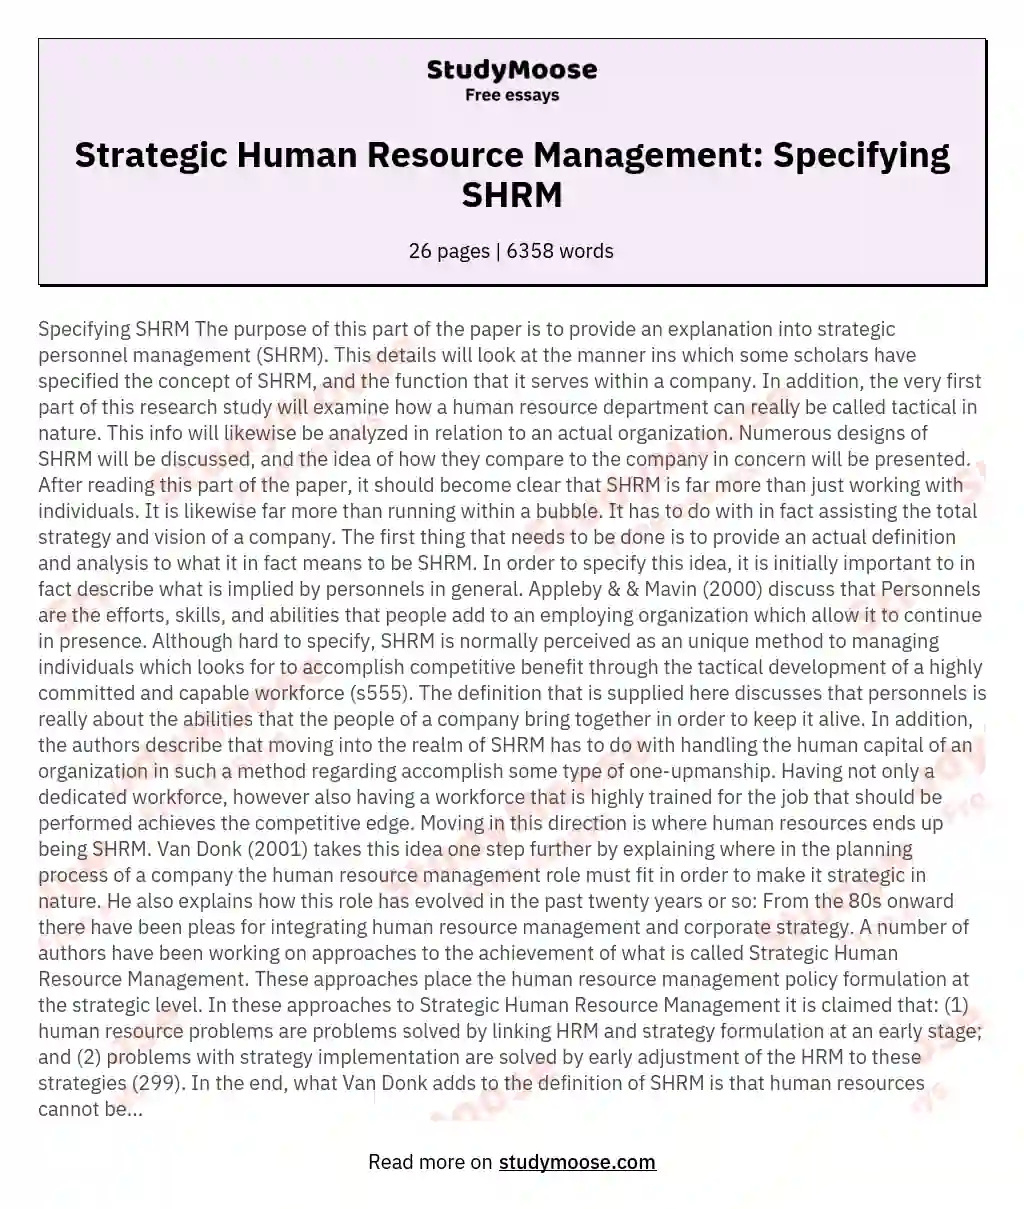 Strategic Human Resource Management: Specifying SHRM essay